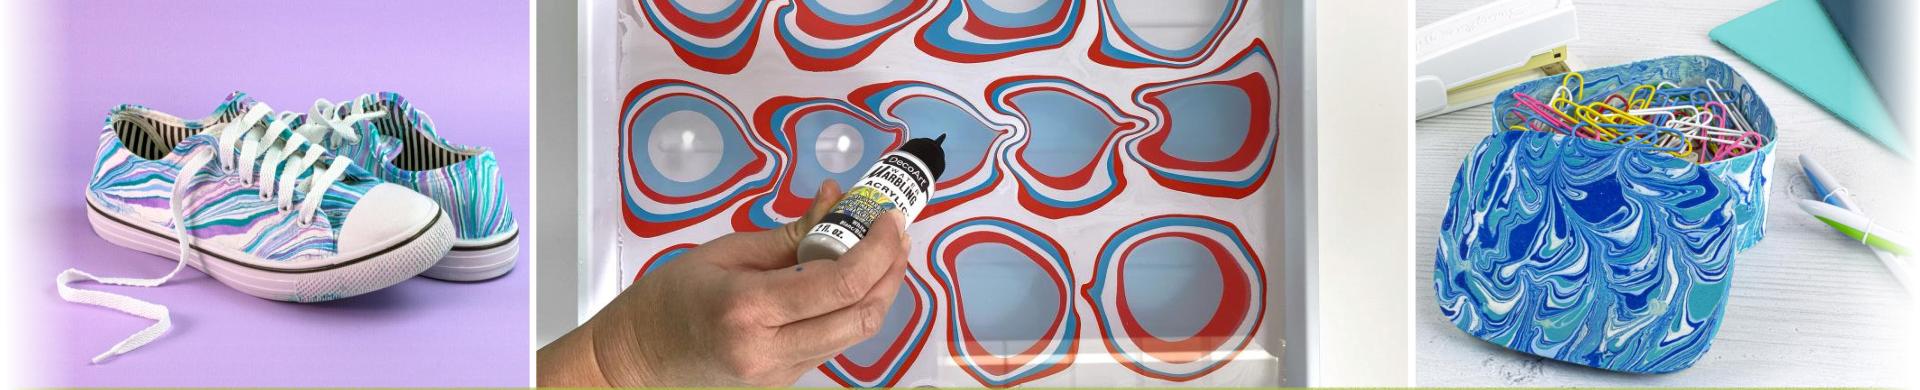 DecoArt Water Marbling Acrylic Paints & Accessories